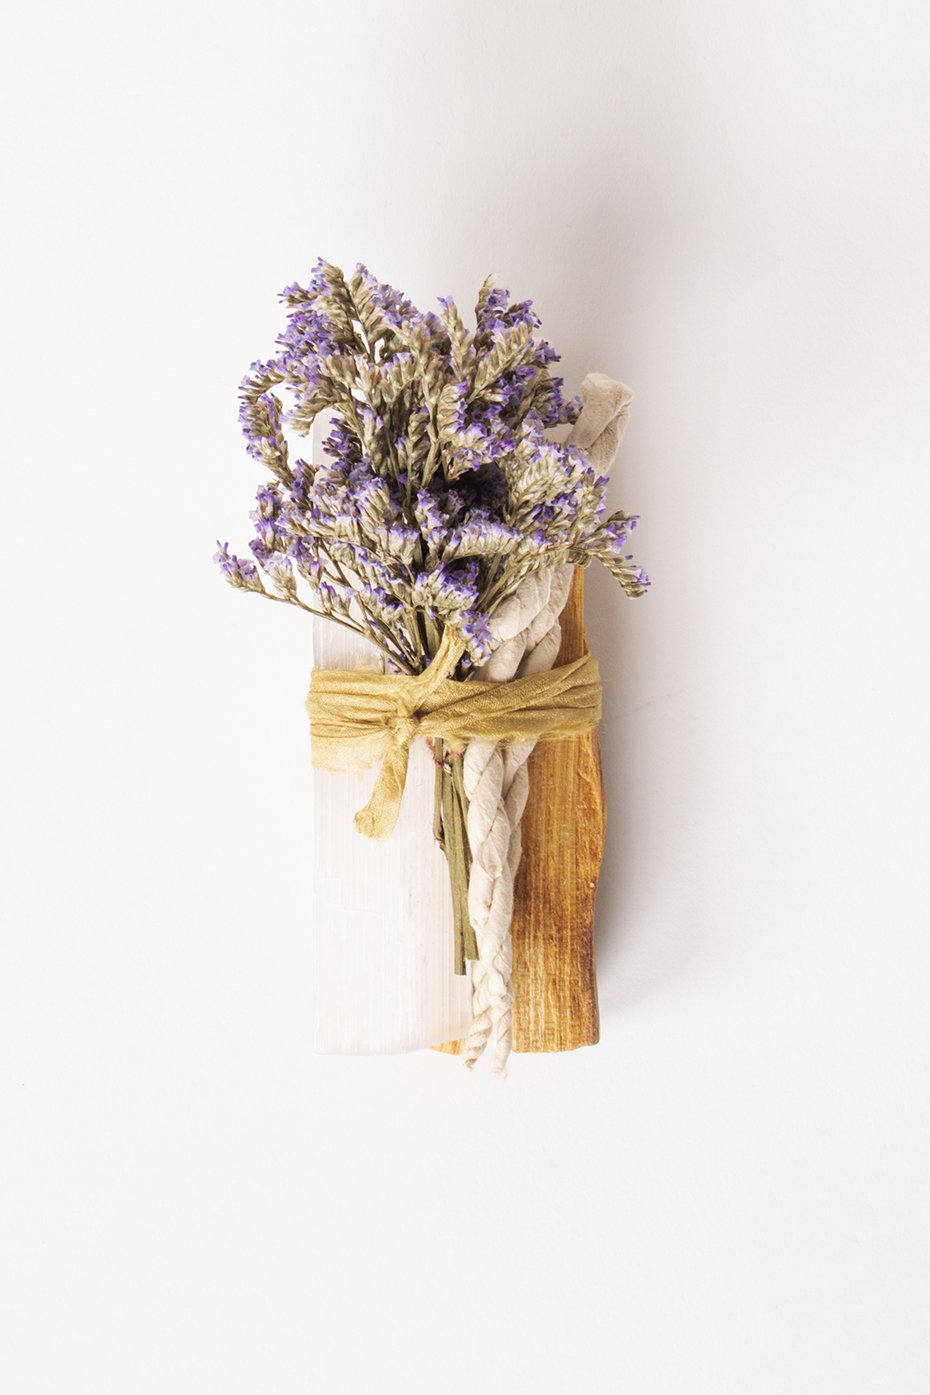 parigotte-palo-santo-selenite-incenses-and-dried-flowers